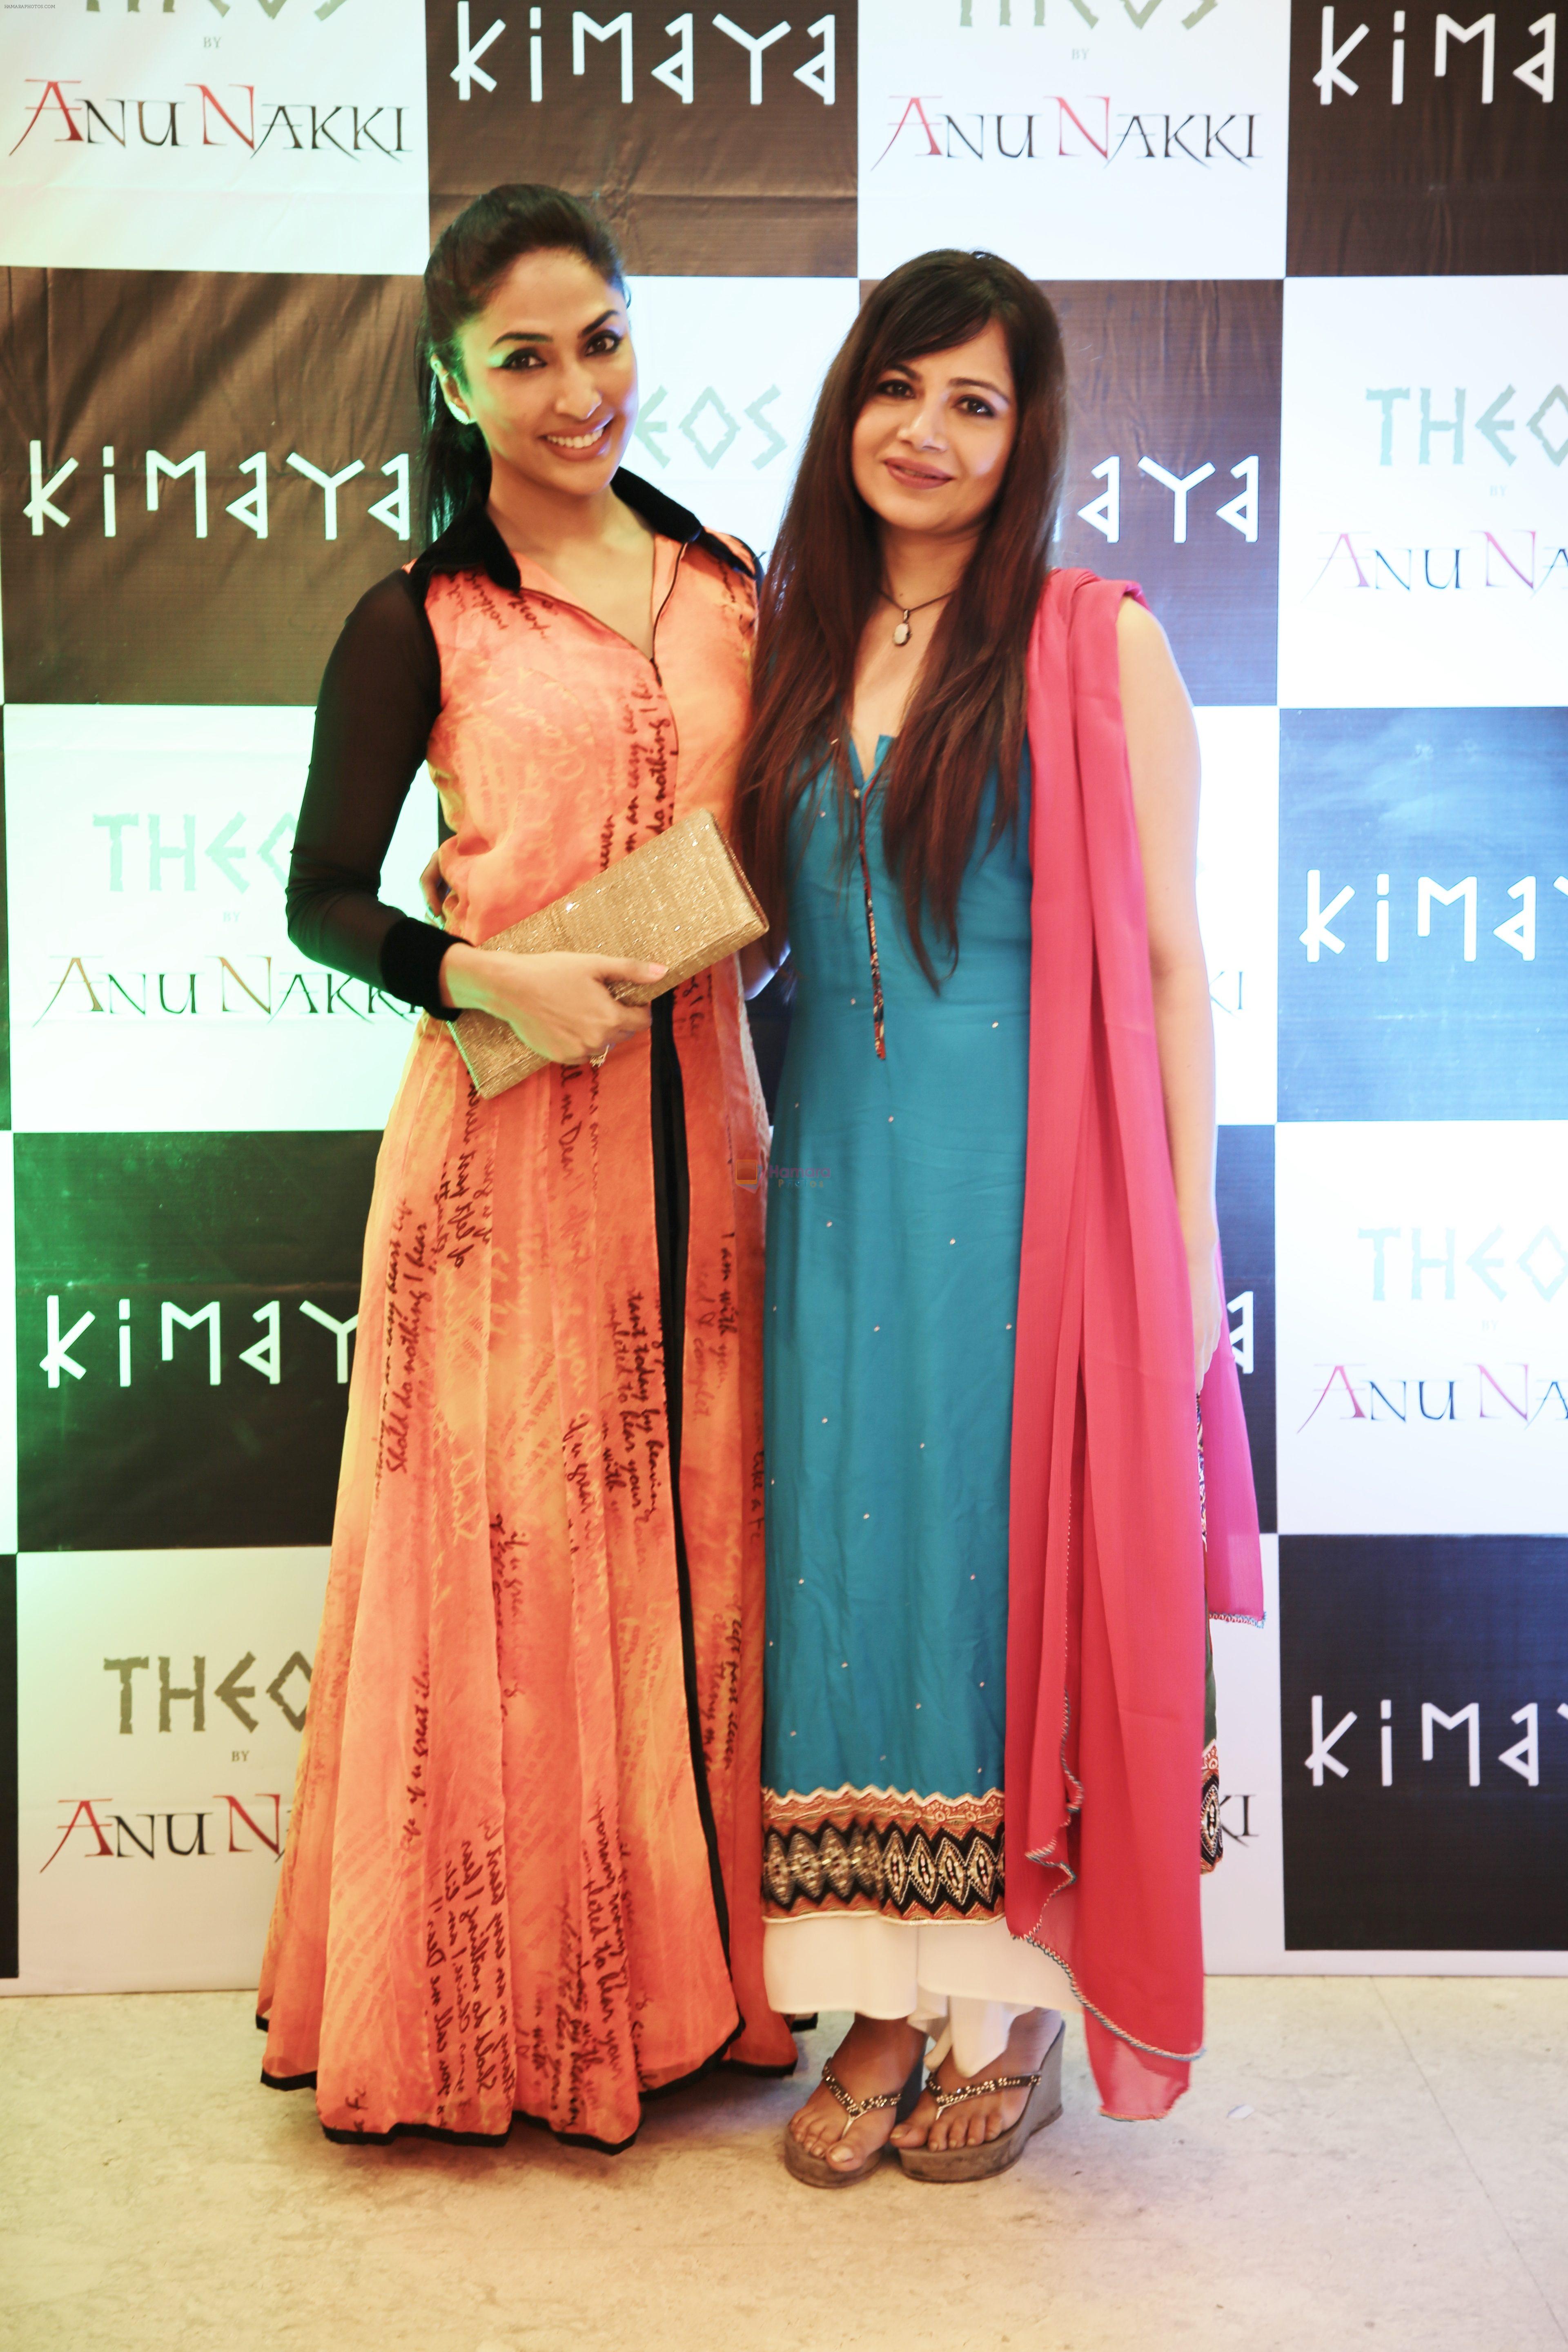 Mauli Ganguli, Natasha Singh attends launch of Ancient Greece inspired fashion 2014 collection THEOS at Kimaya